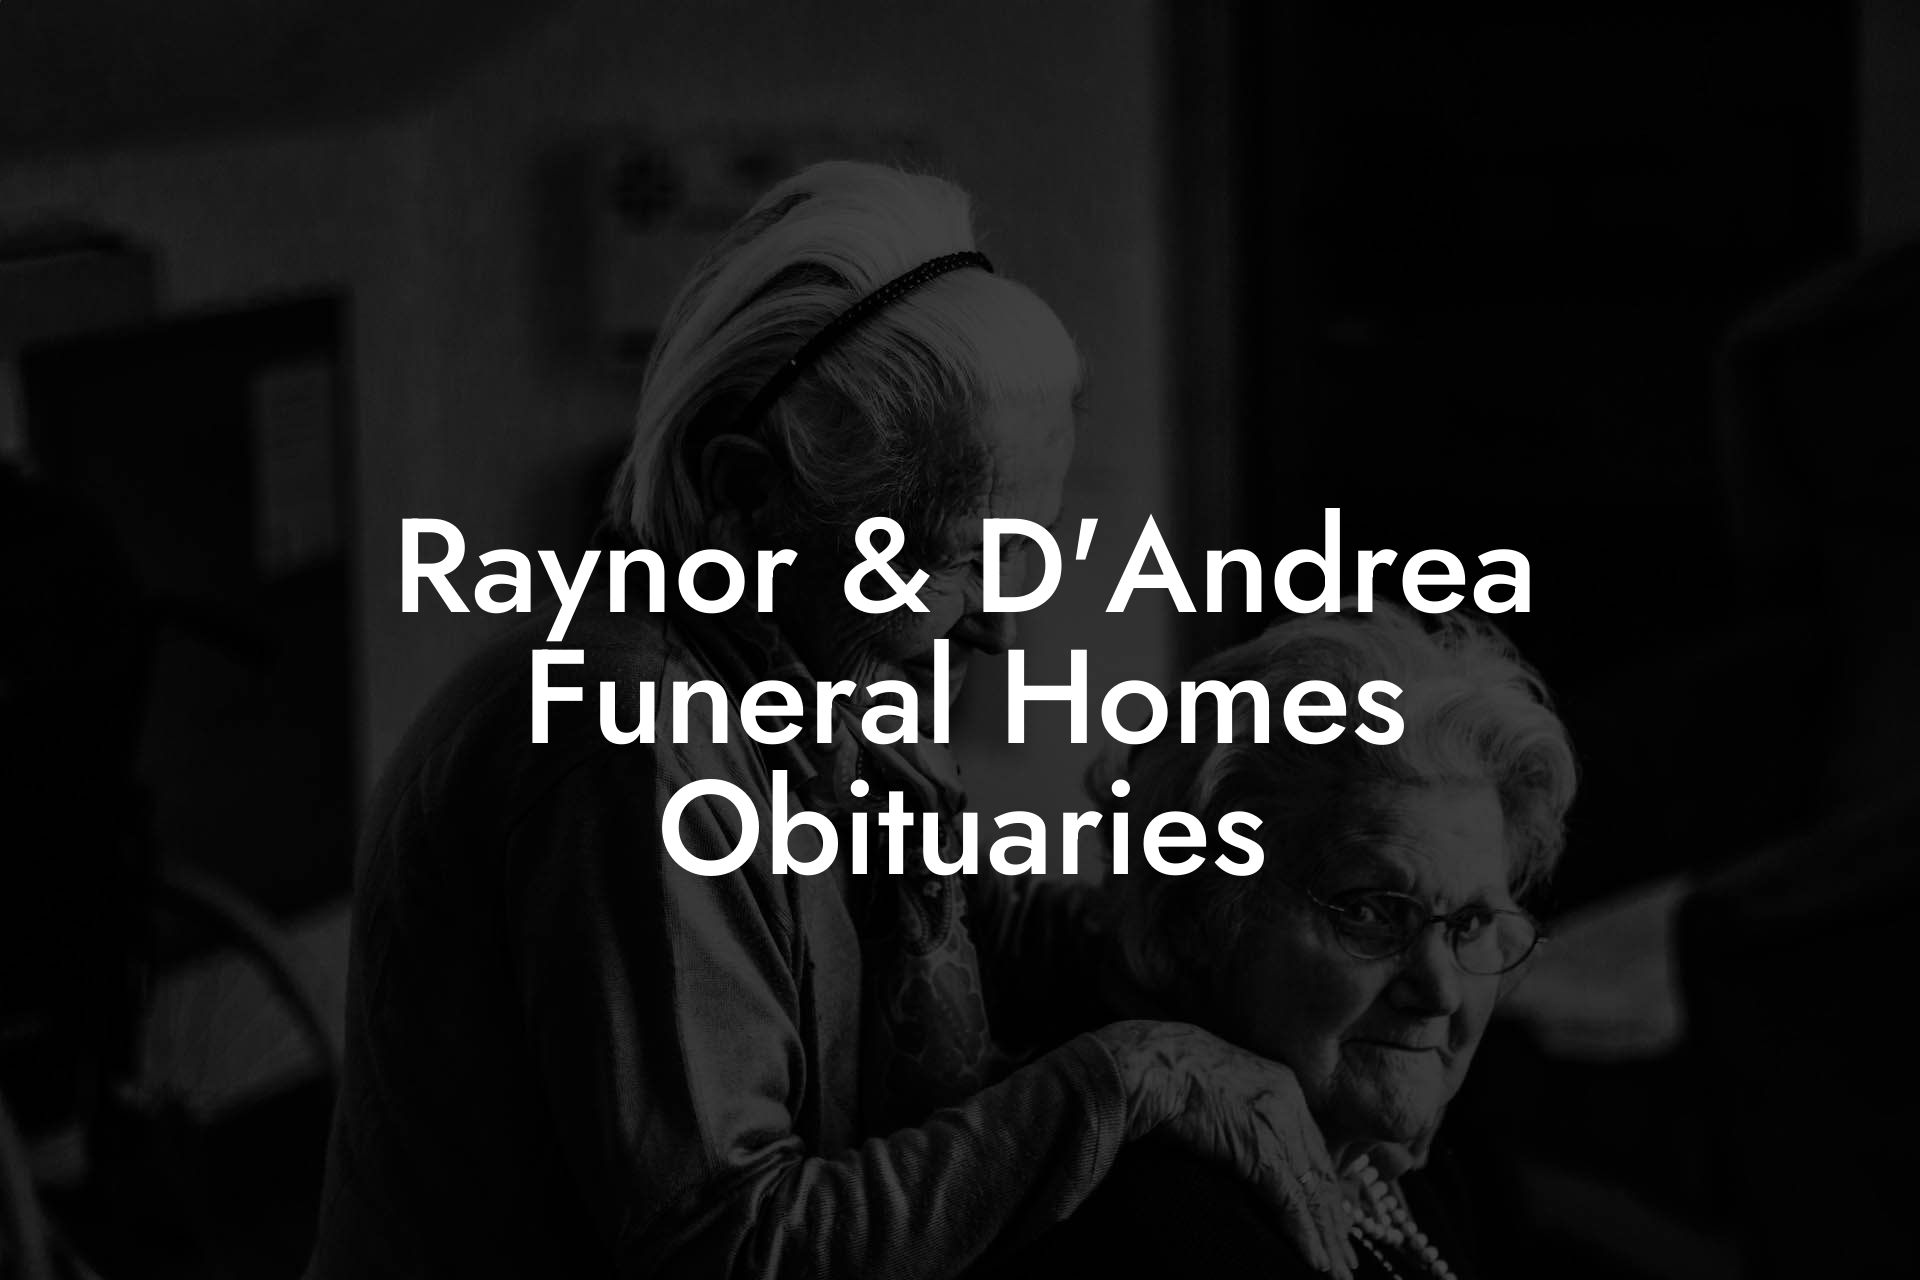 Raynor & D'Andrea Funeral Homes Obituaries